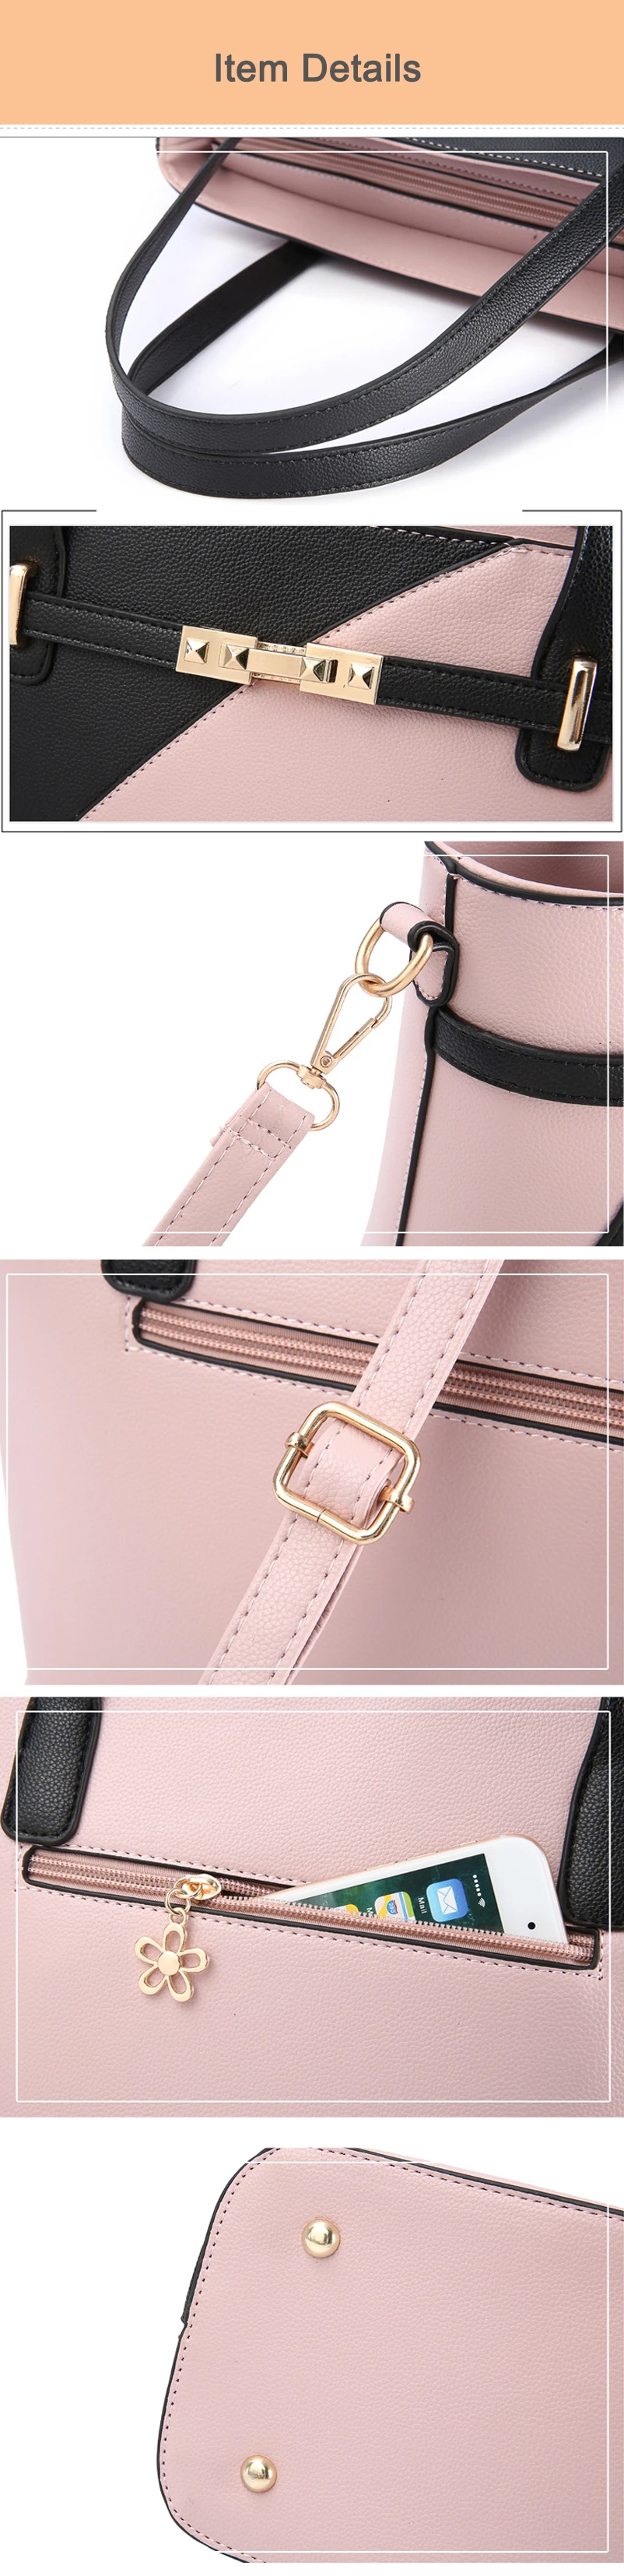  ,  ,   ,  , luxury handbags women bags designer, bolsa feminina, handbag women's leather, 17